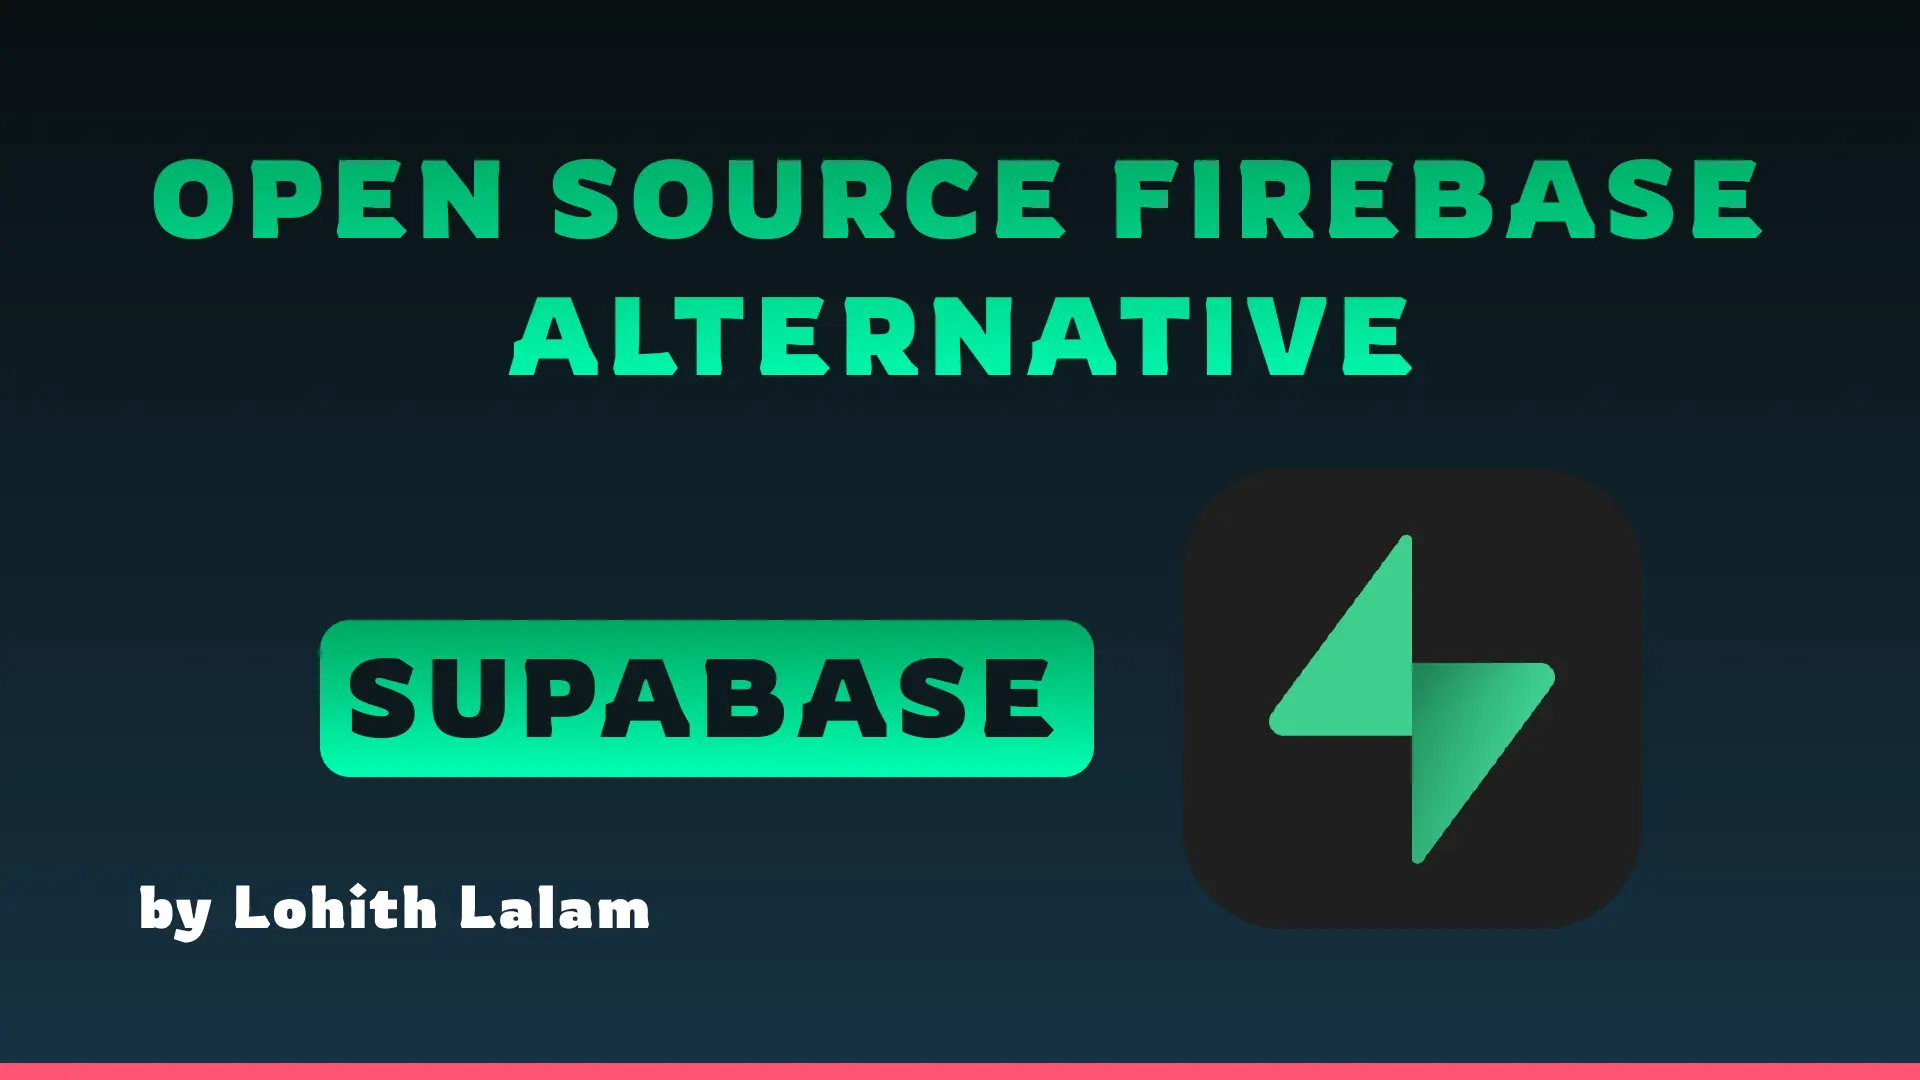 Supabase: The Open Source Firebase Alternative